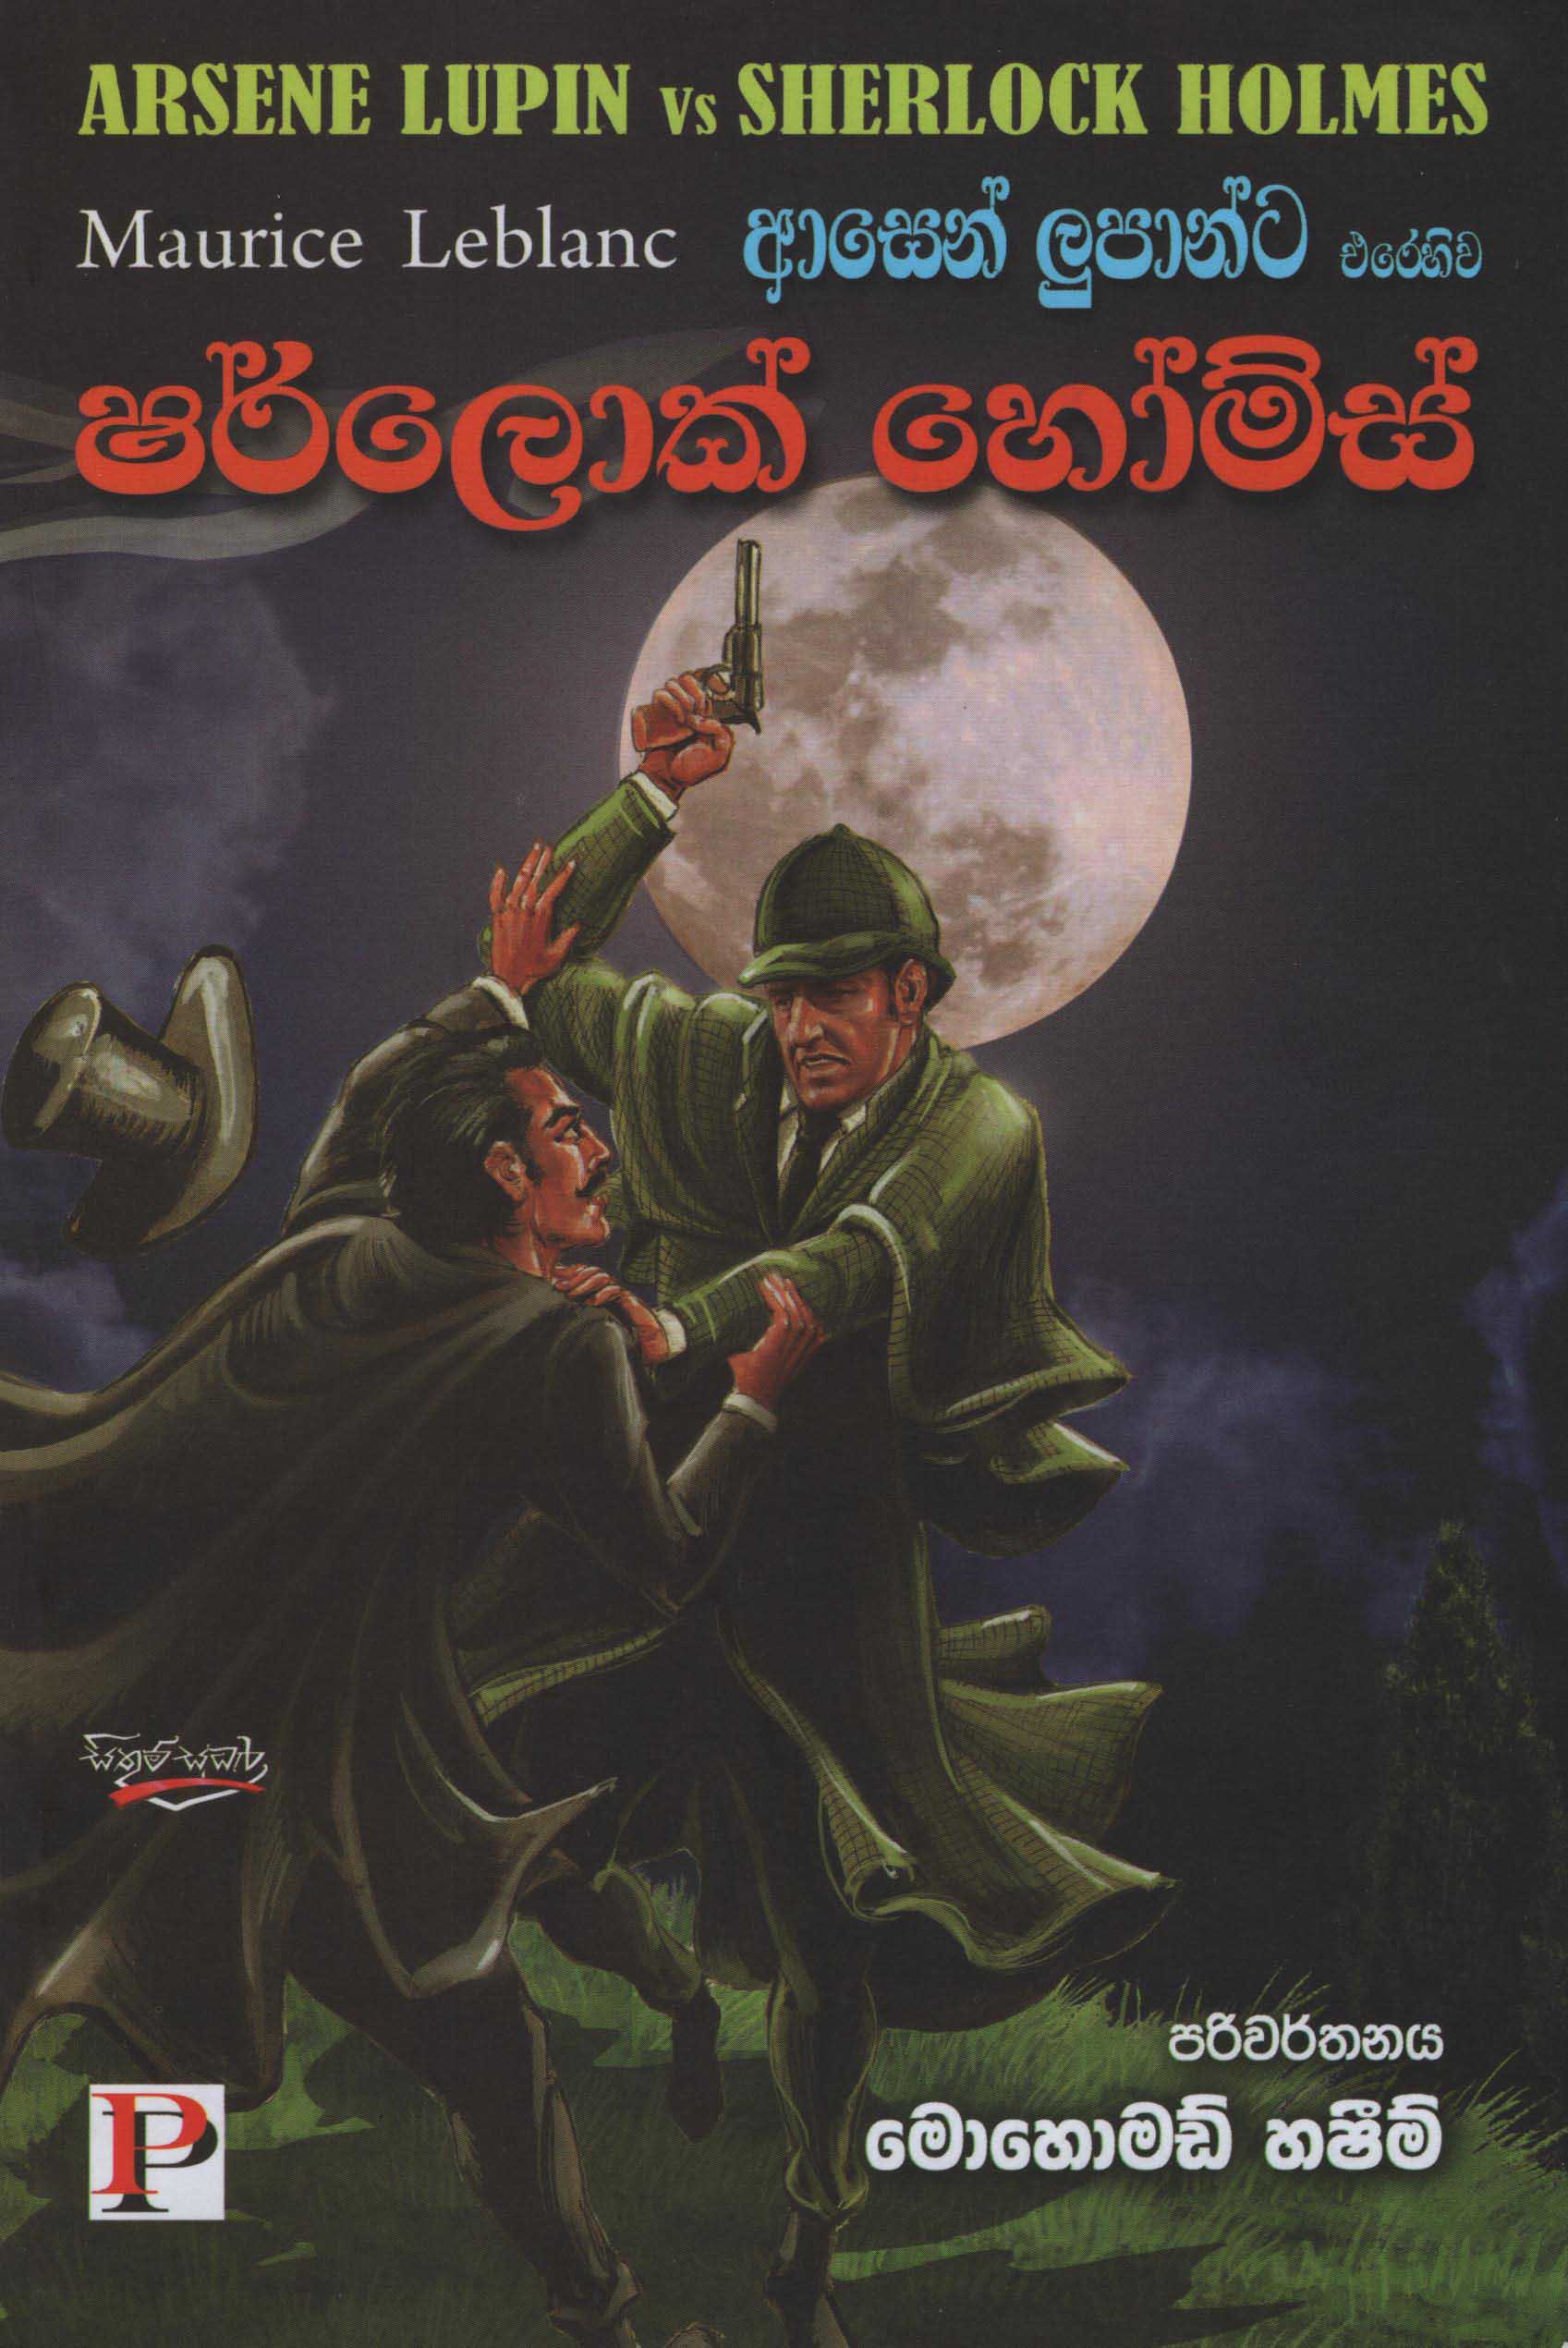 Ashen Lupanta Arehiwa Sherlock Holmes (Arsene Lupin vs Sherlock Holmes by Maurice Leblanc)